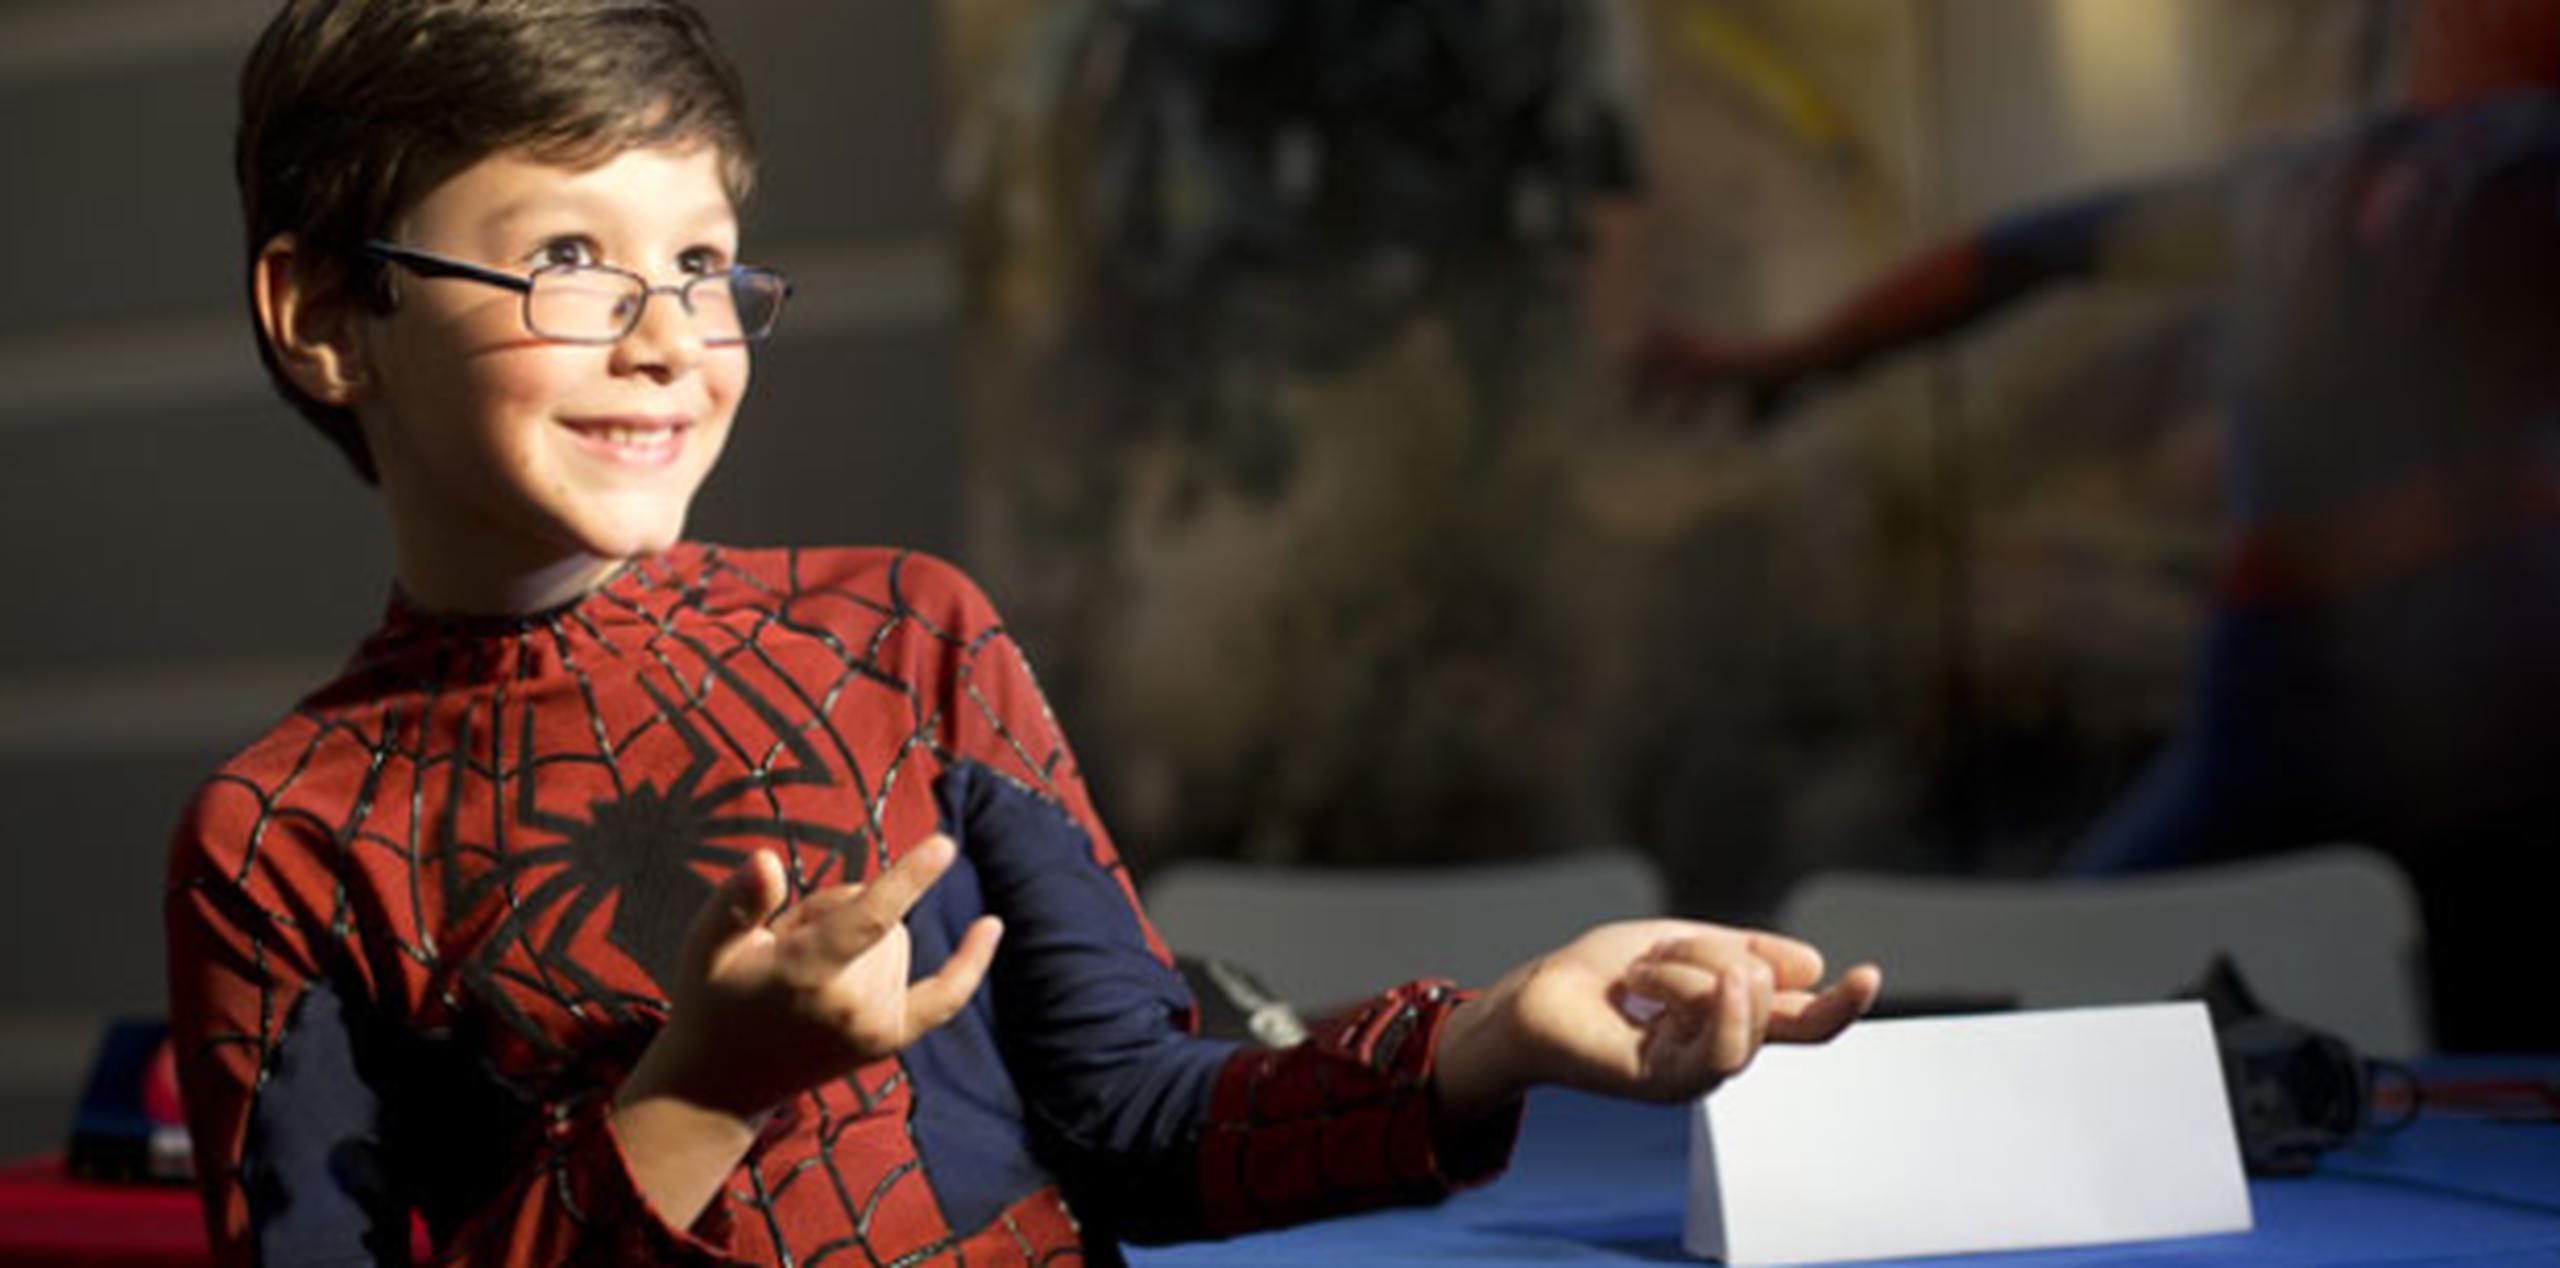 El boricua Jorge Vega encarna a Spiderman en la nueva entrega de este filme. (xavier.araujo@gfrmedia.com)